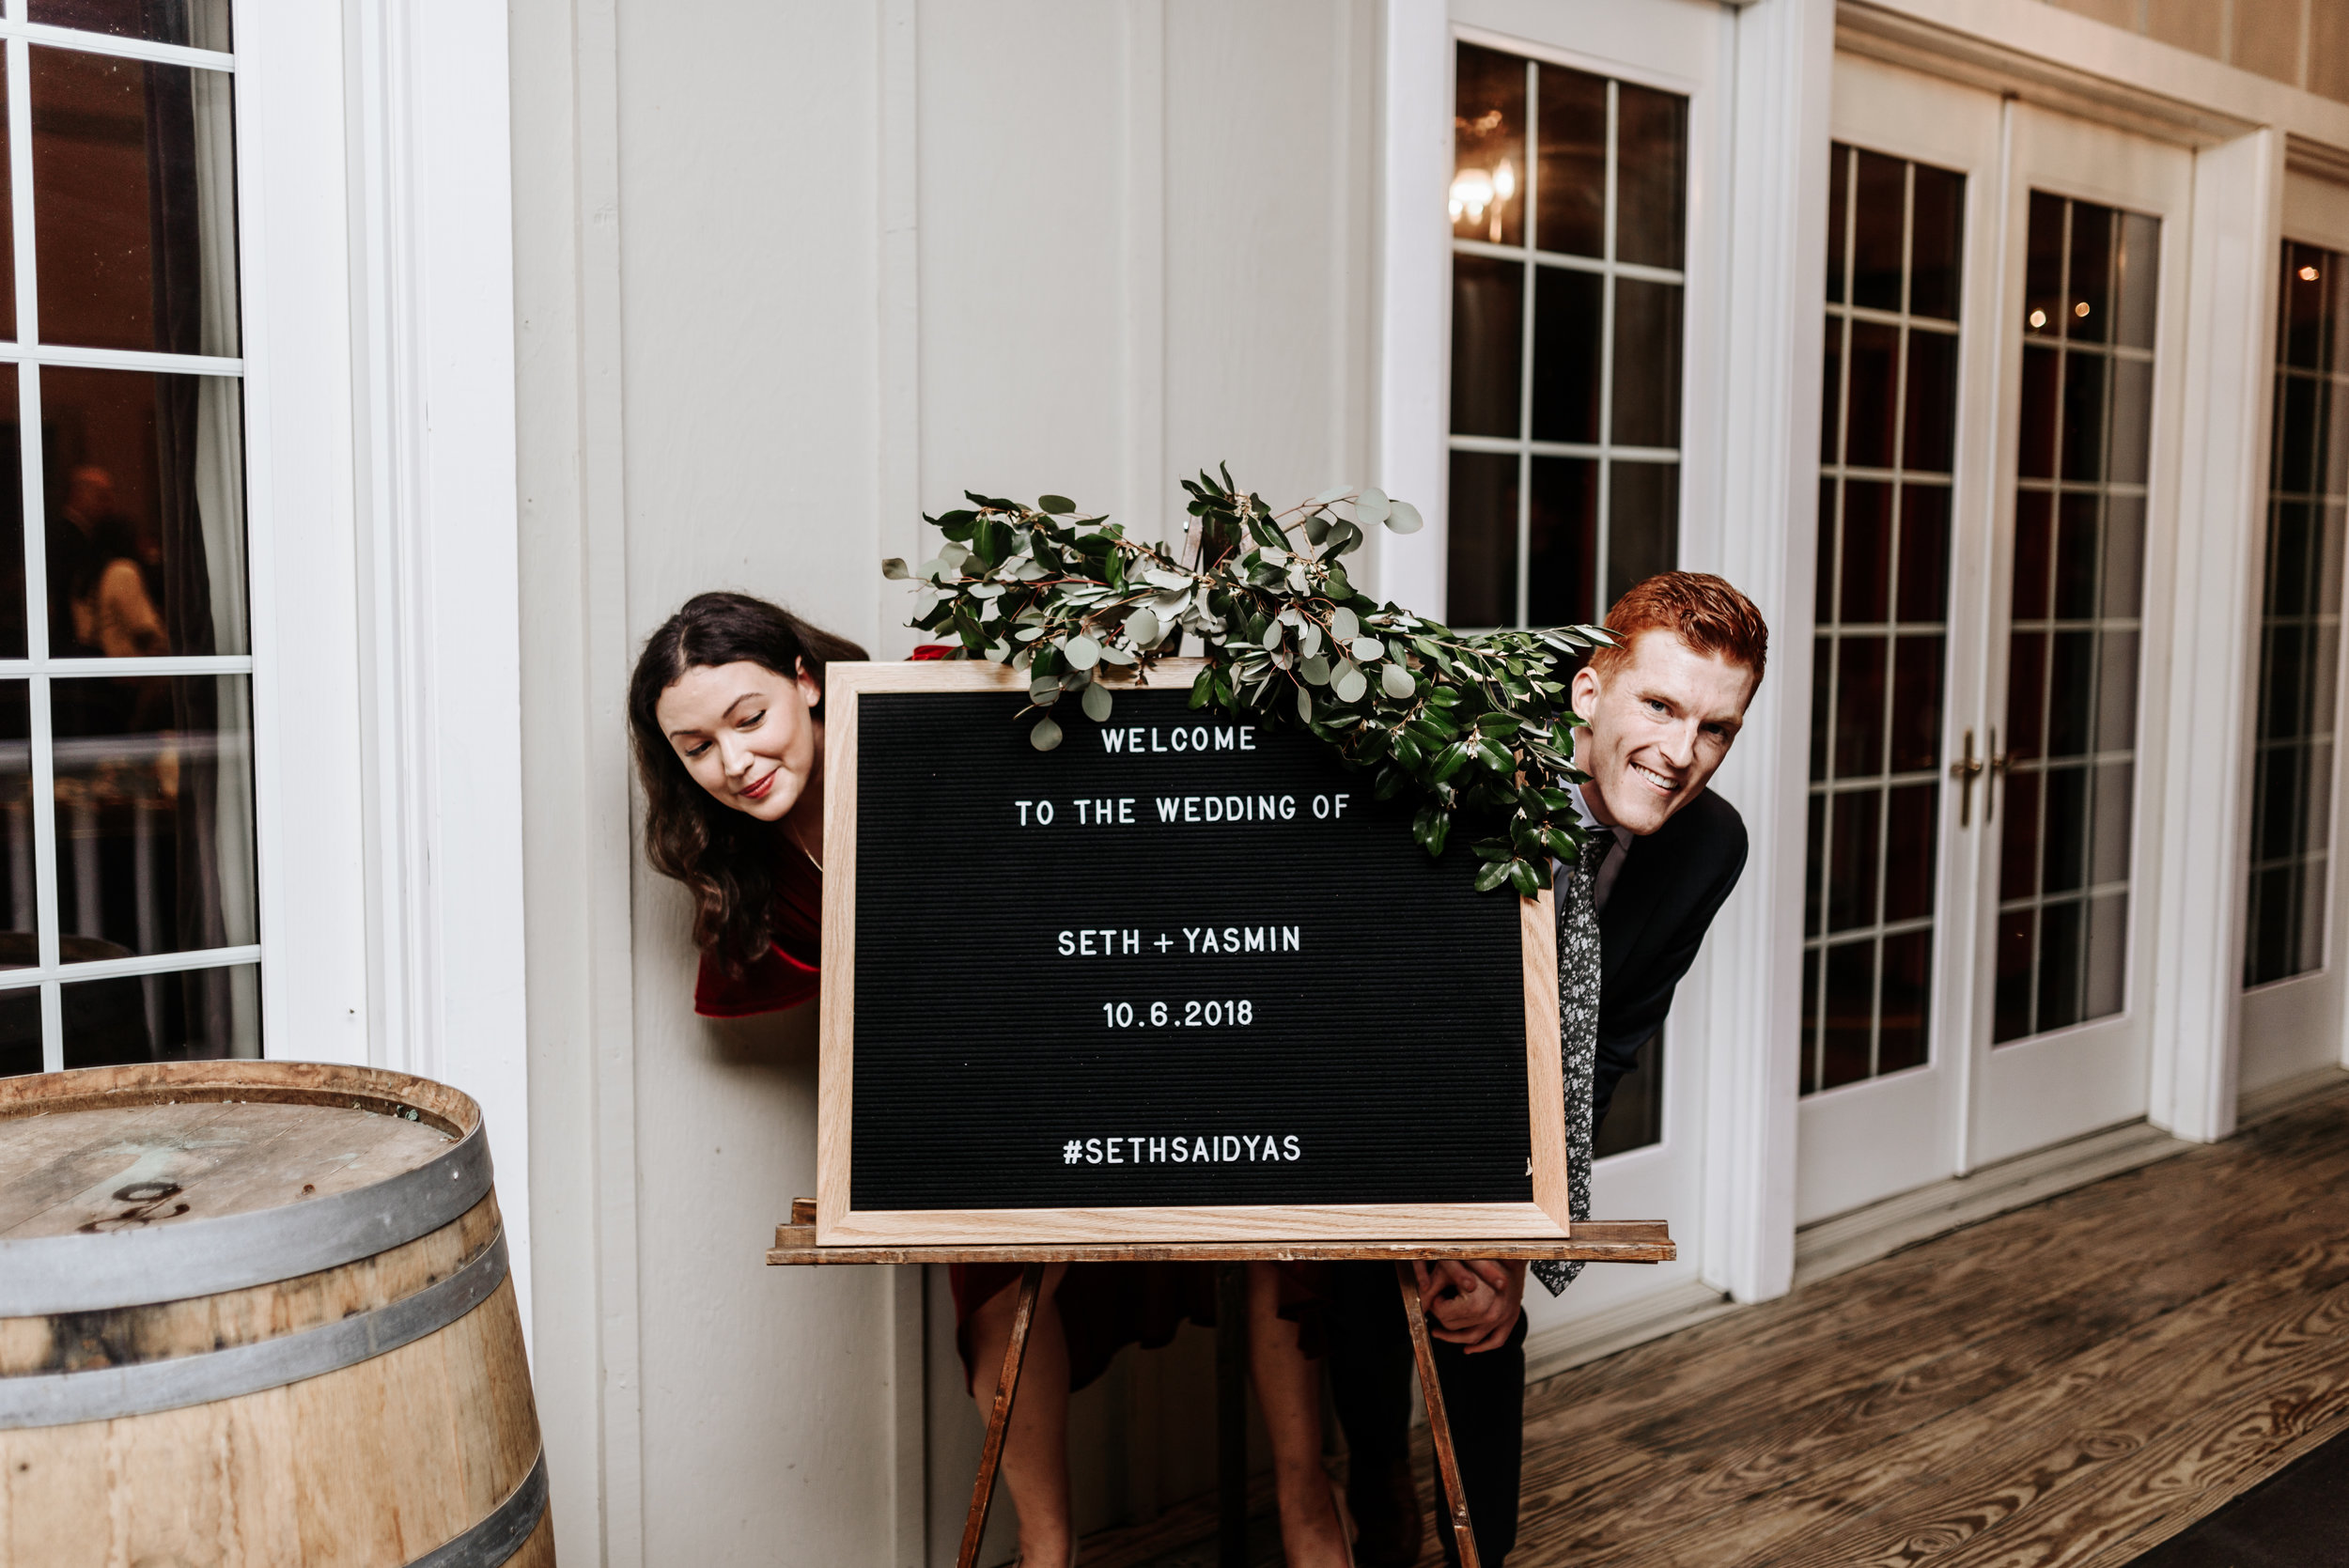 Veritas-Vineyards-and-Winery-Wedding-Photography-Afton-Virginia-Yasmin-Seth-Photography-by-V-9820.jpg